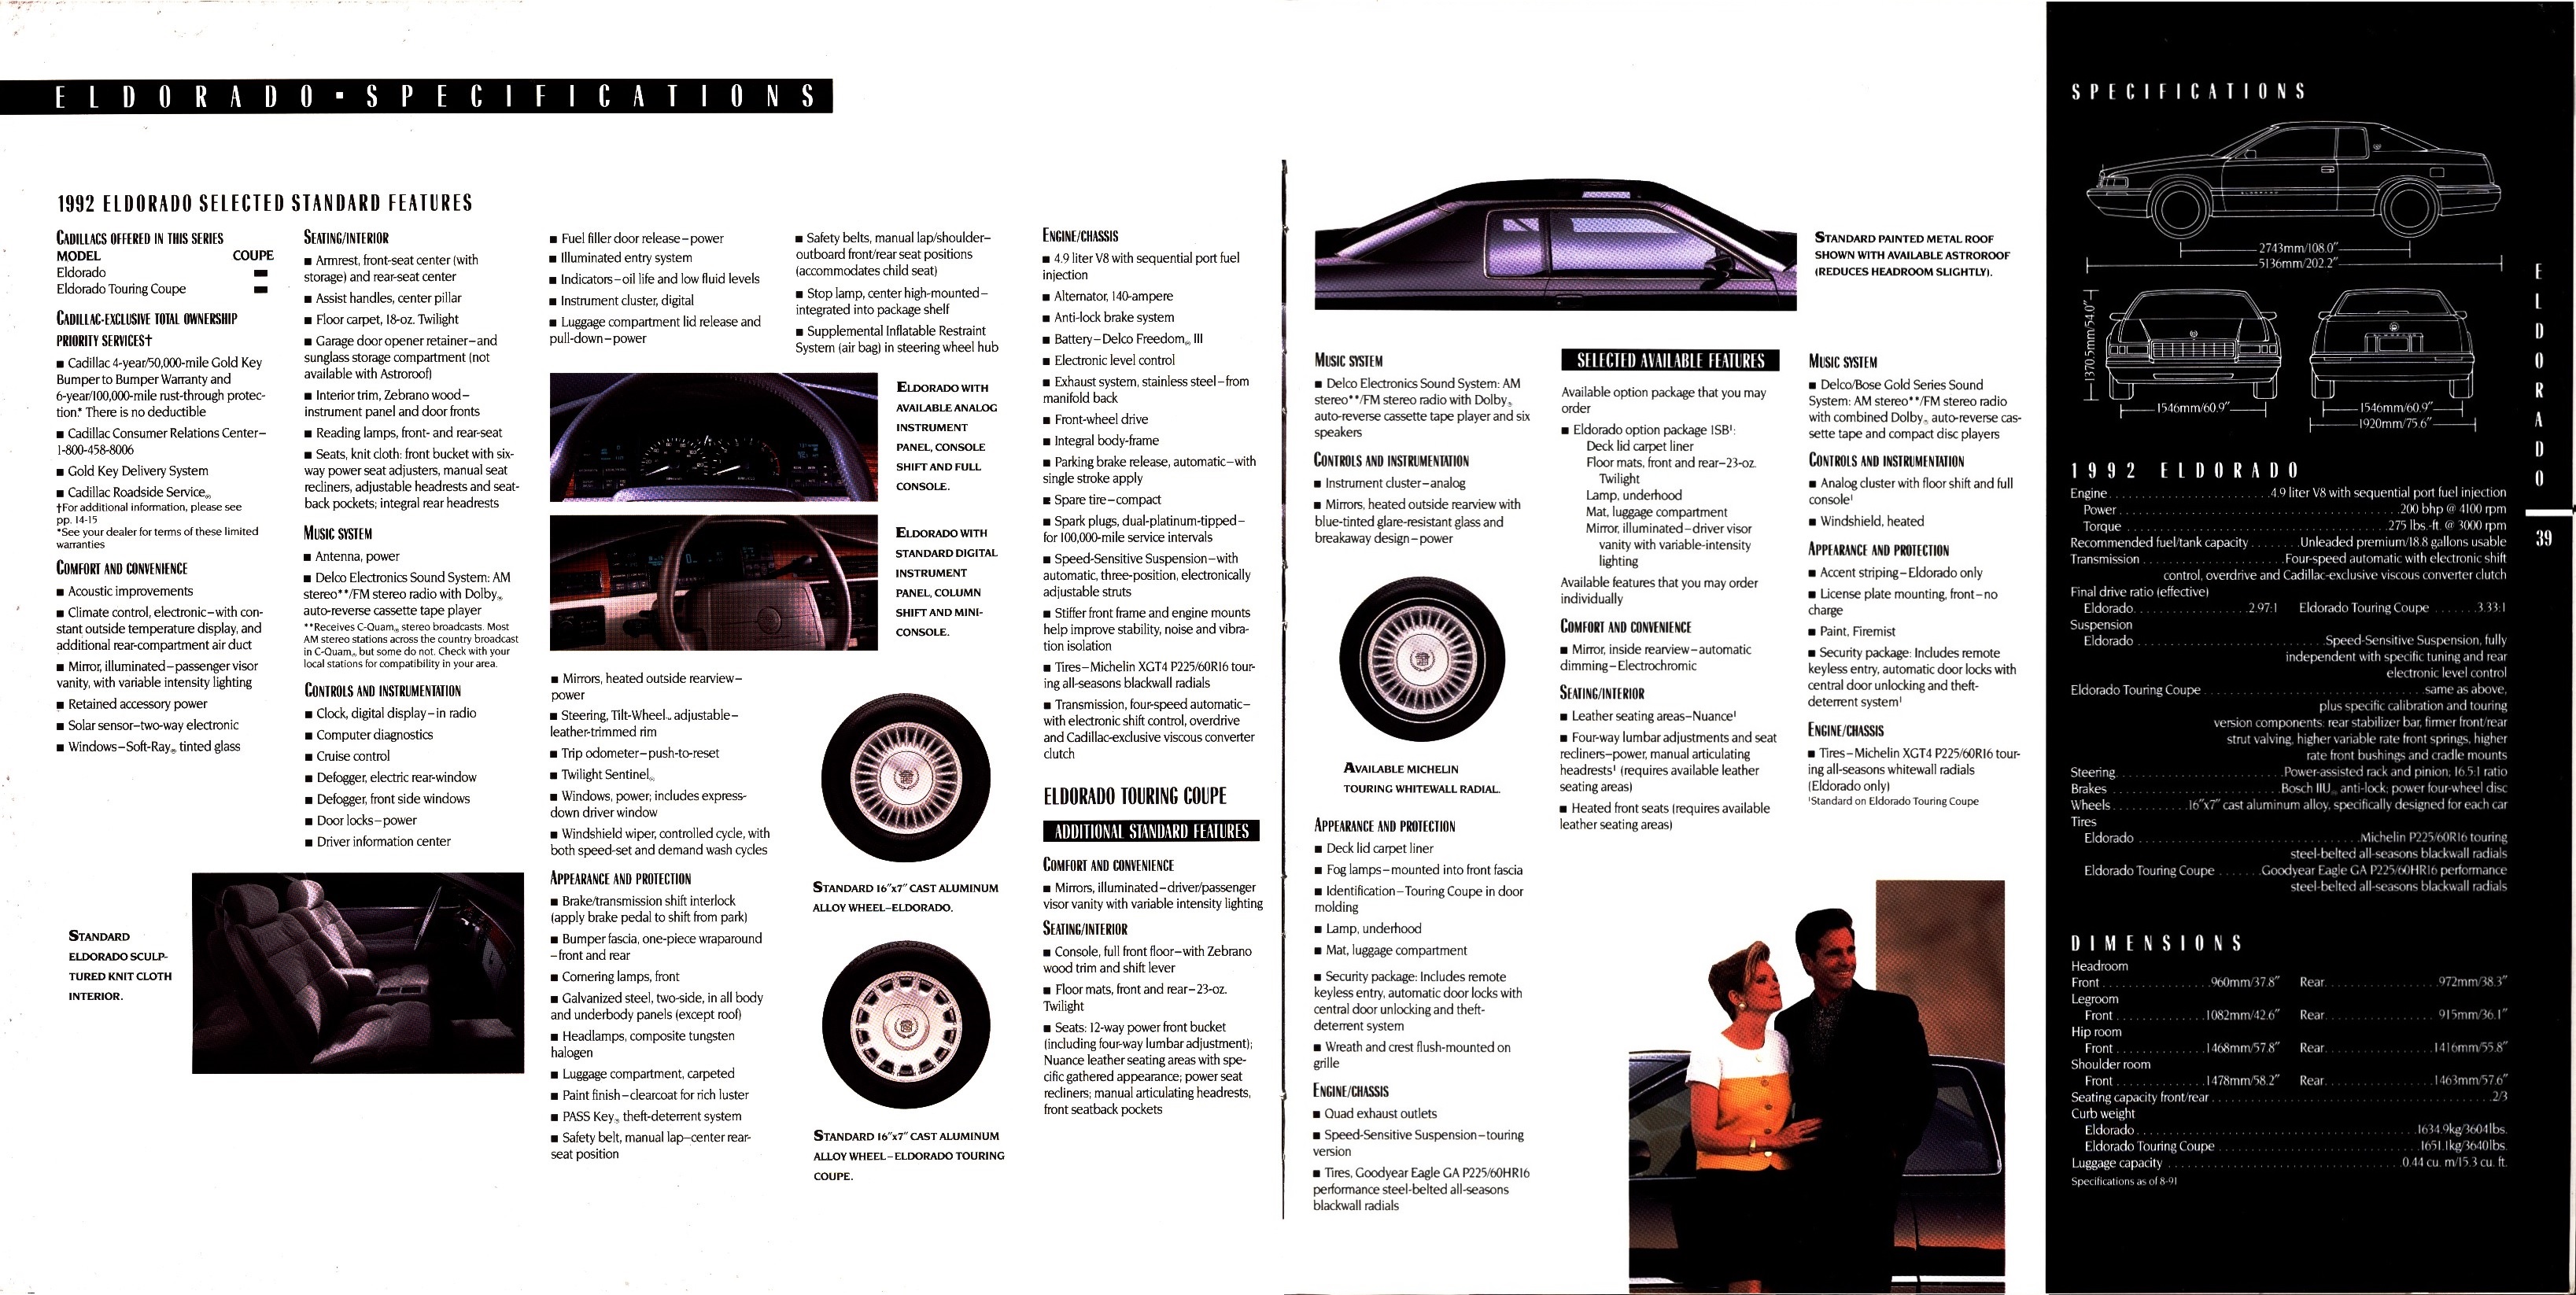 1992 Cadillac Full Line Prestige Brochure 38-39